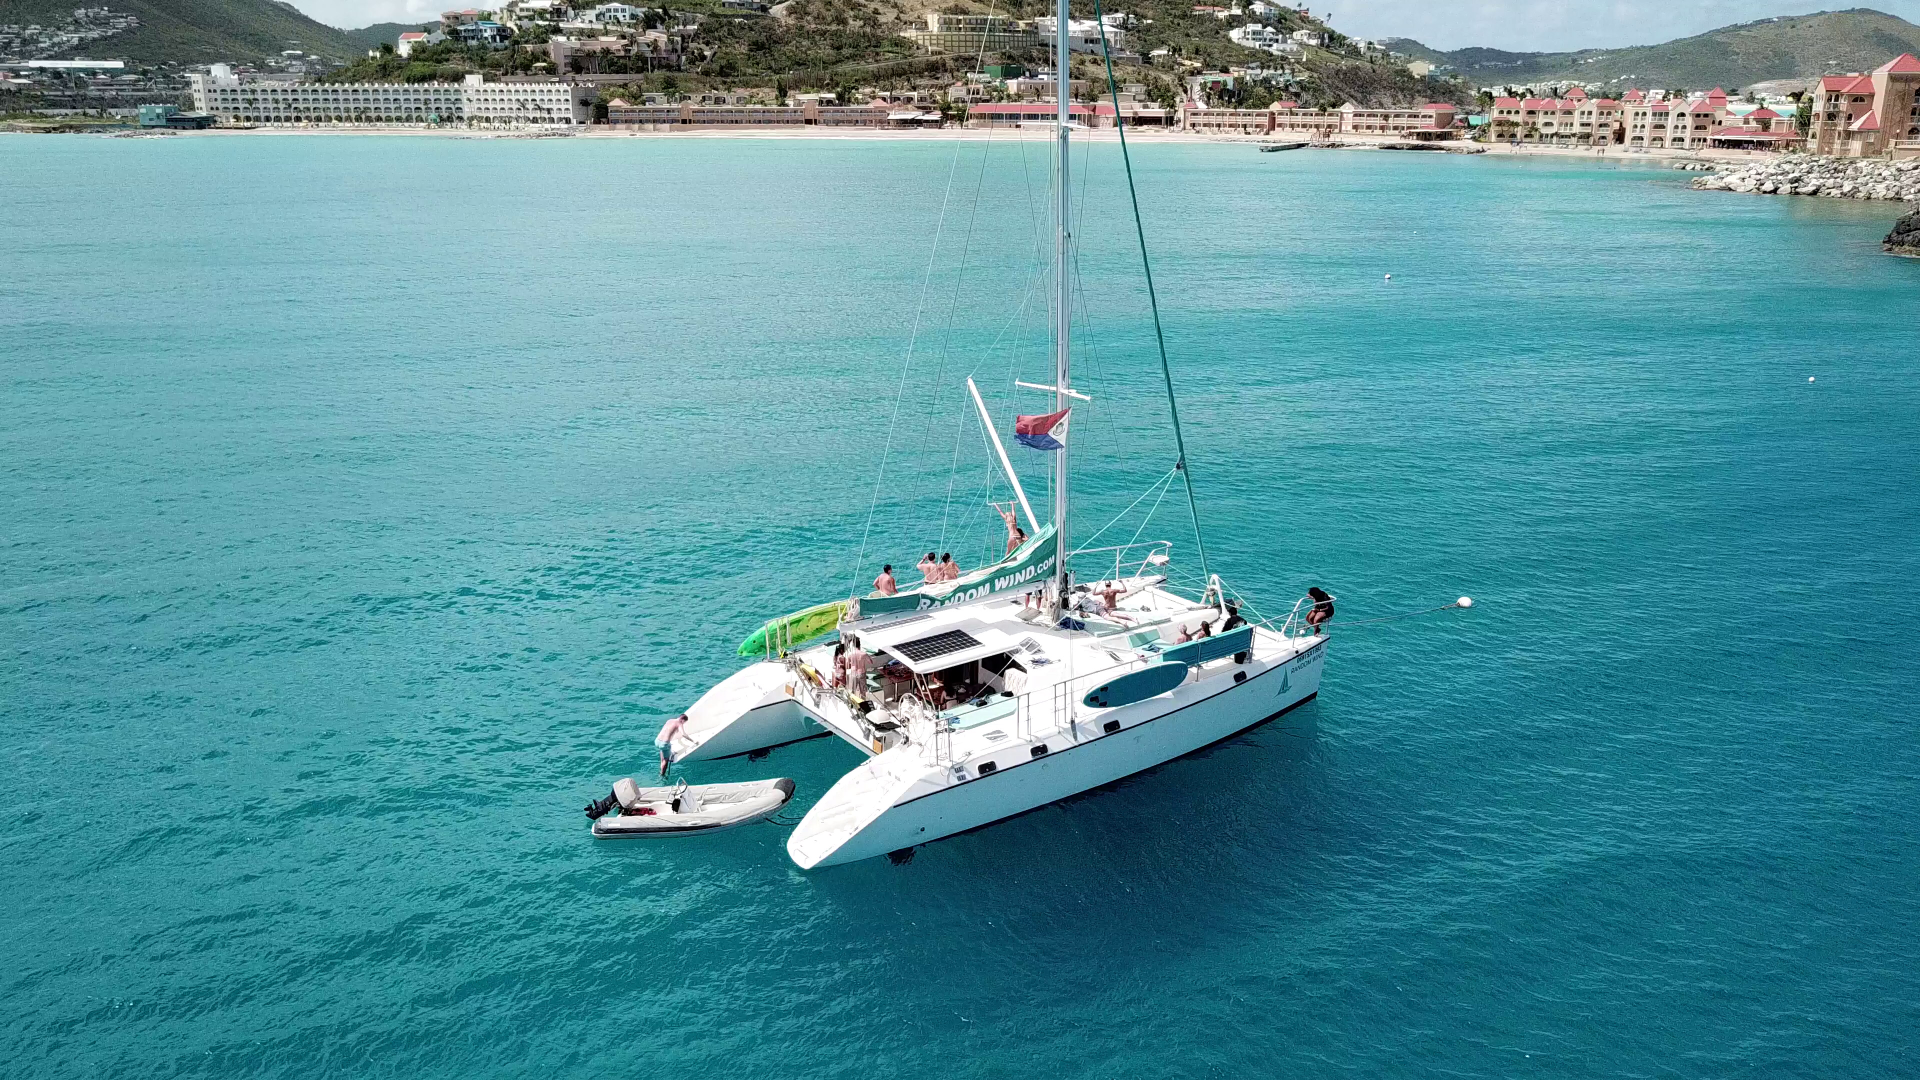 Random Wind catamaran yacht charter anchored near St Maarten